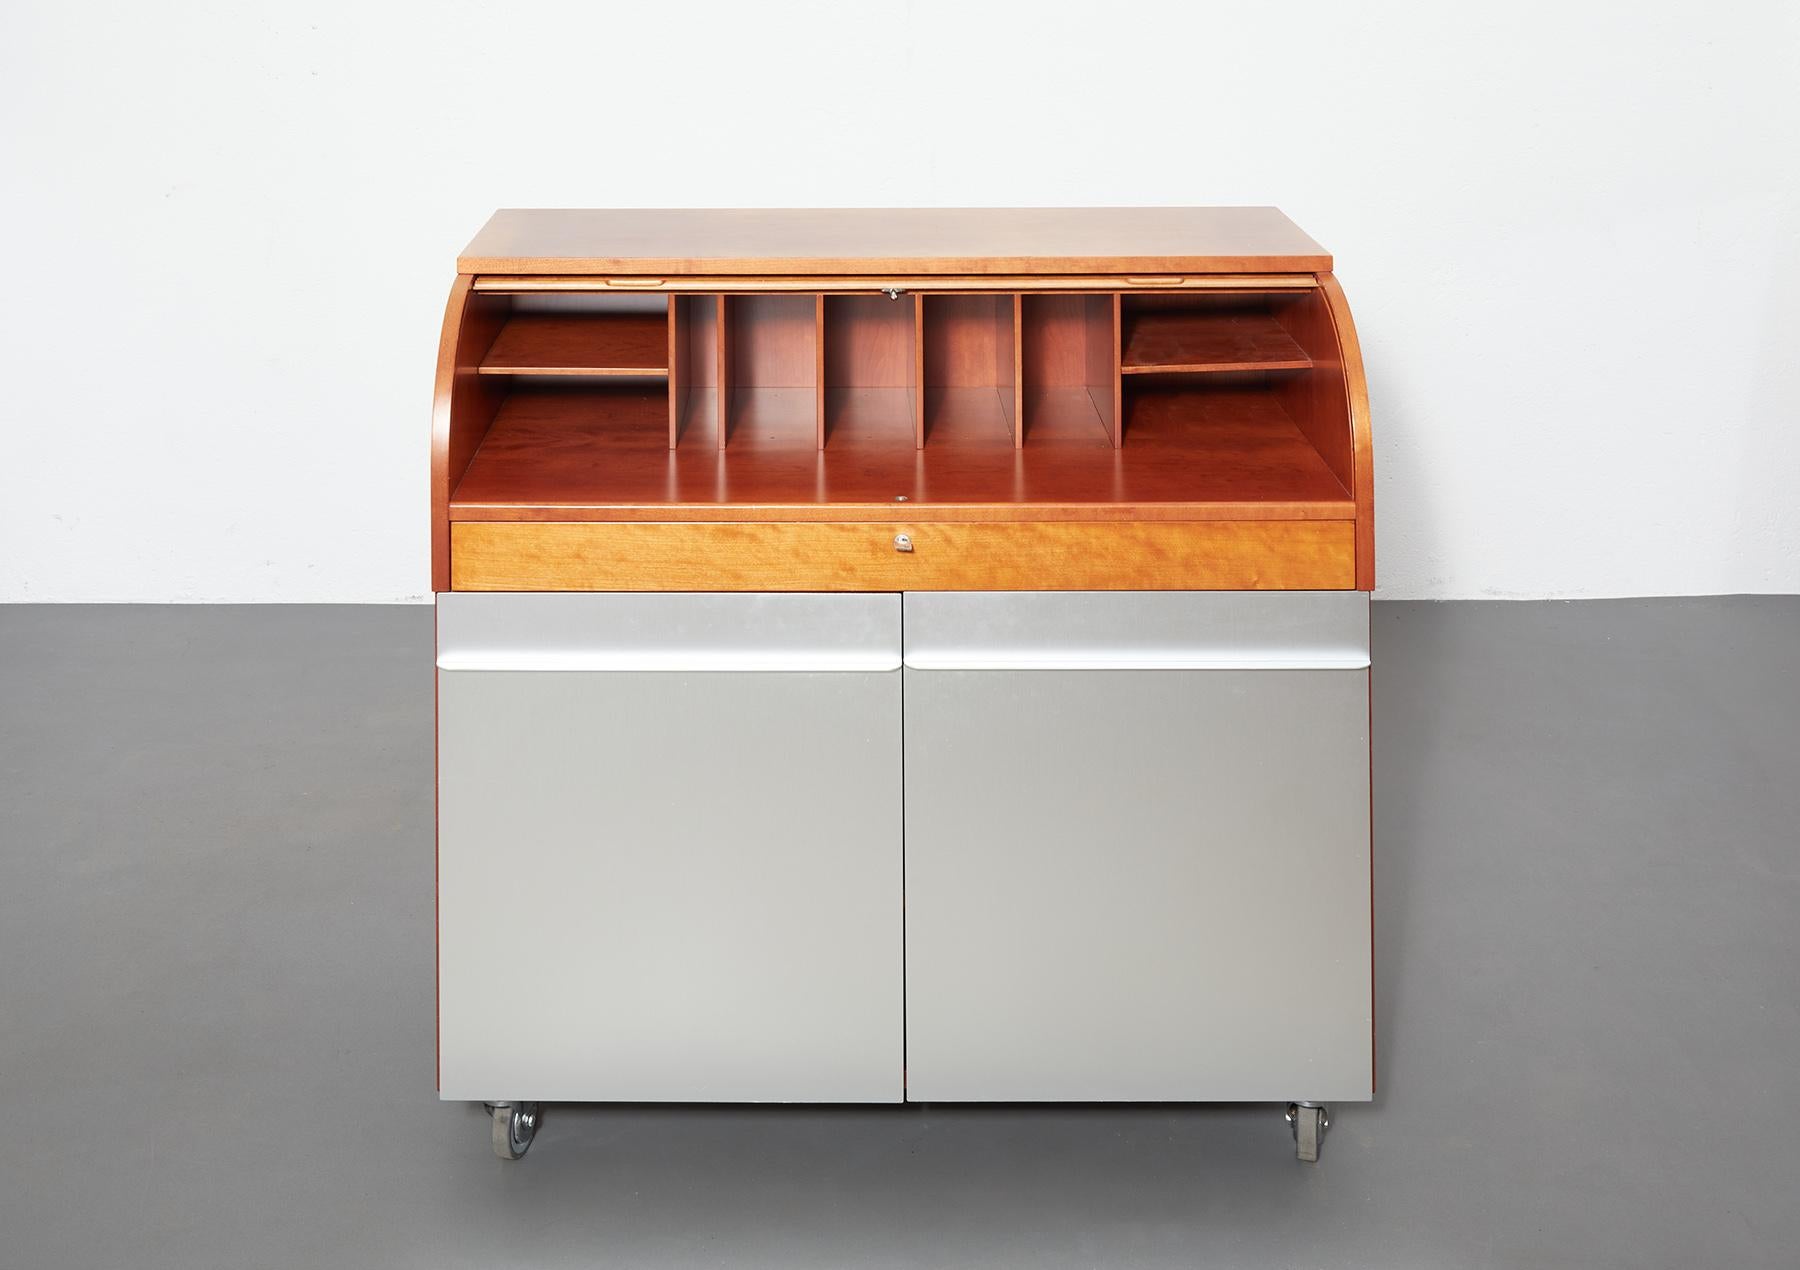 Italian design cherrywood and aluminium writing desk by Vico Magistretti, De Padova Italy.
This desk comes from the 